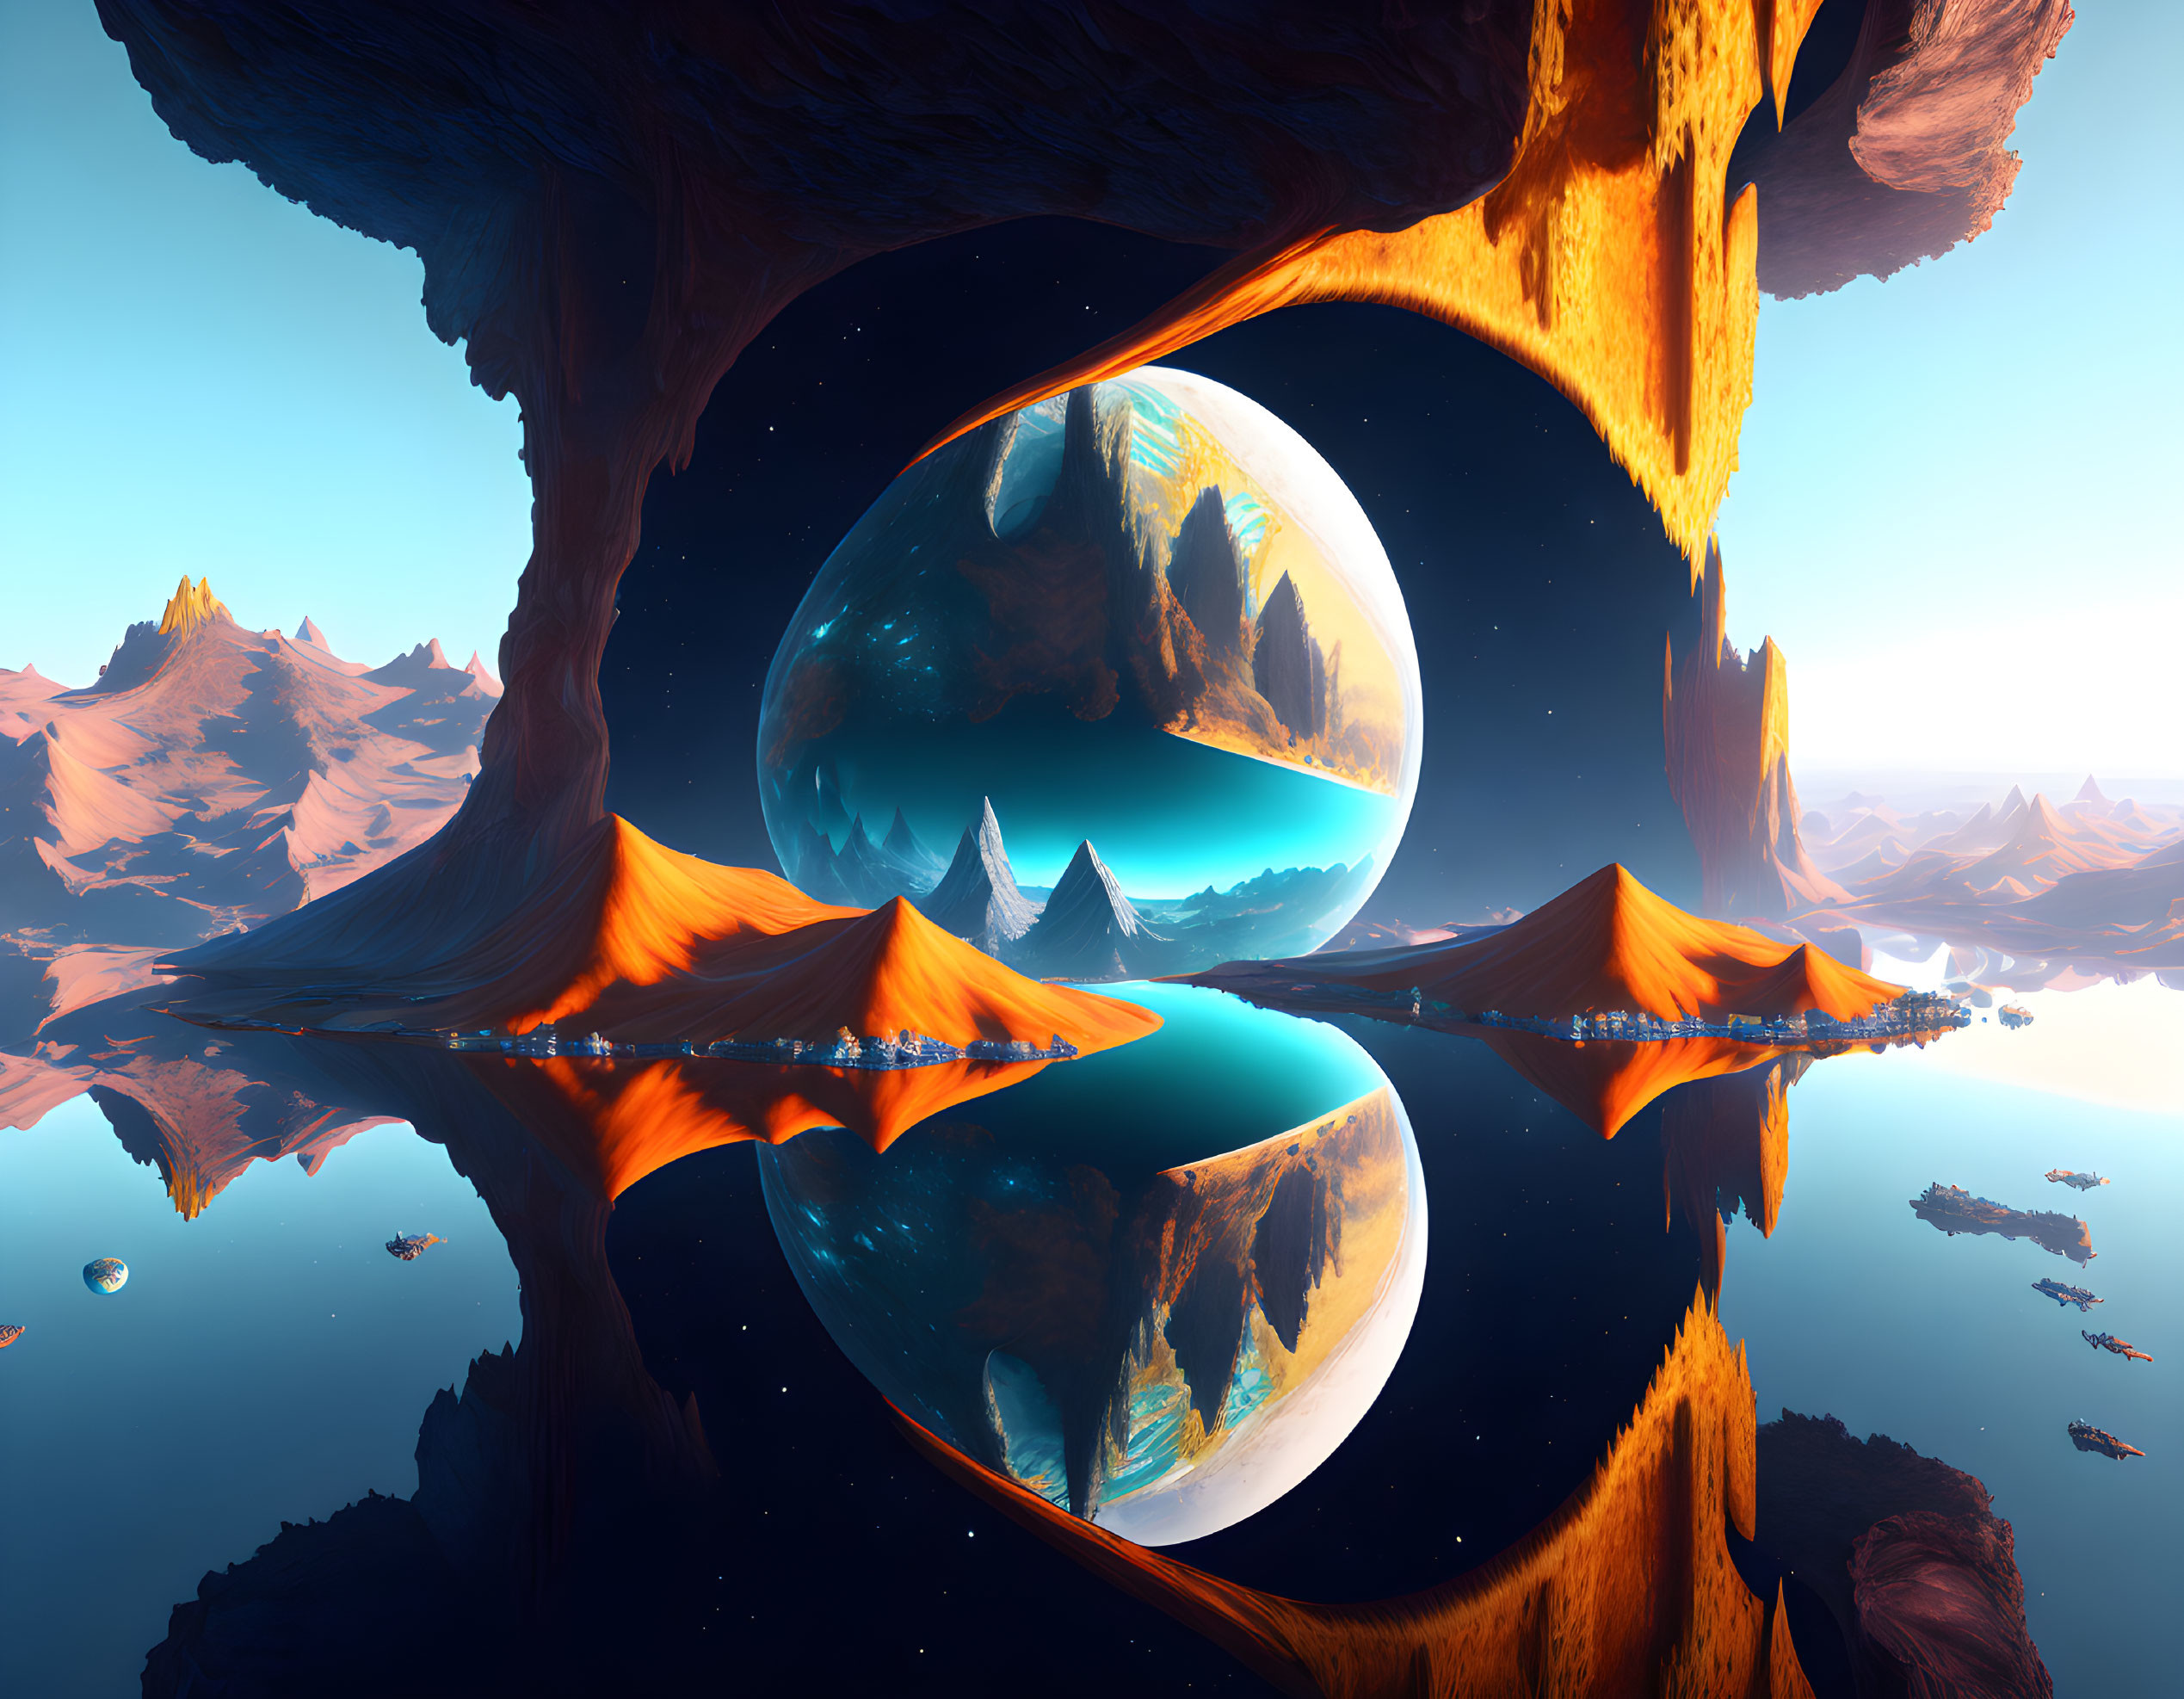 Colorful alien landscape with portal and celestial bodies above orange terrain